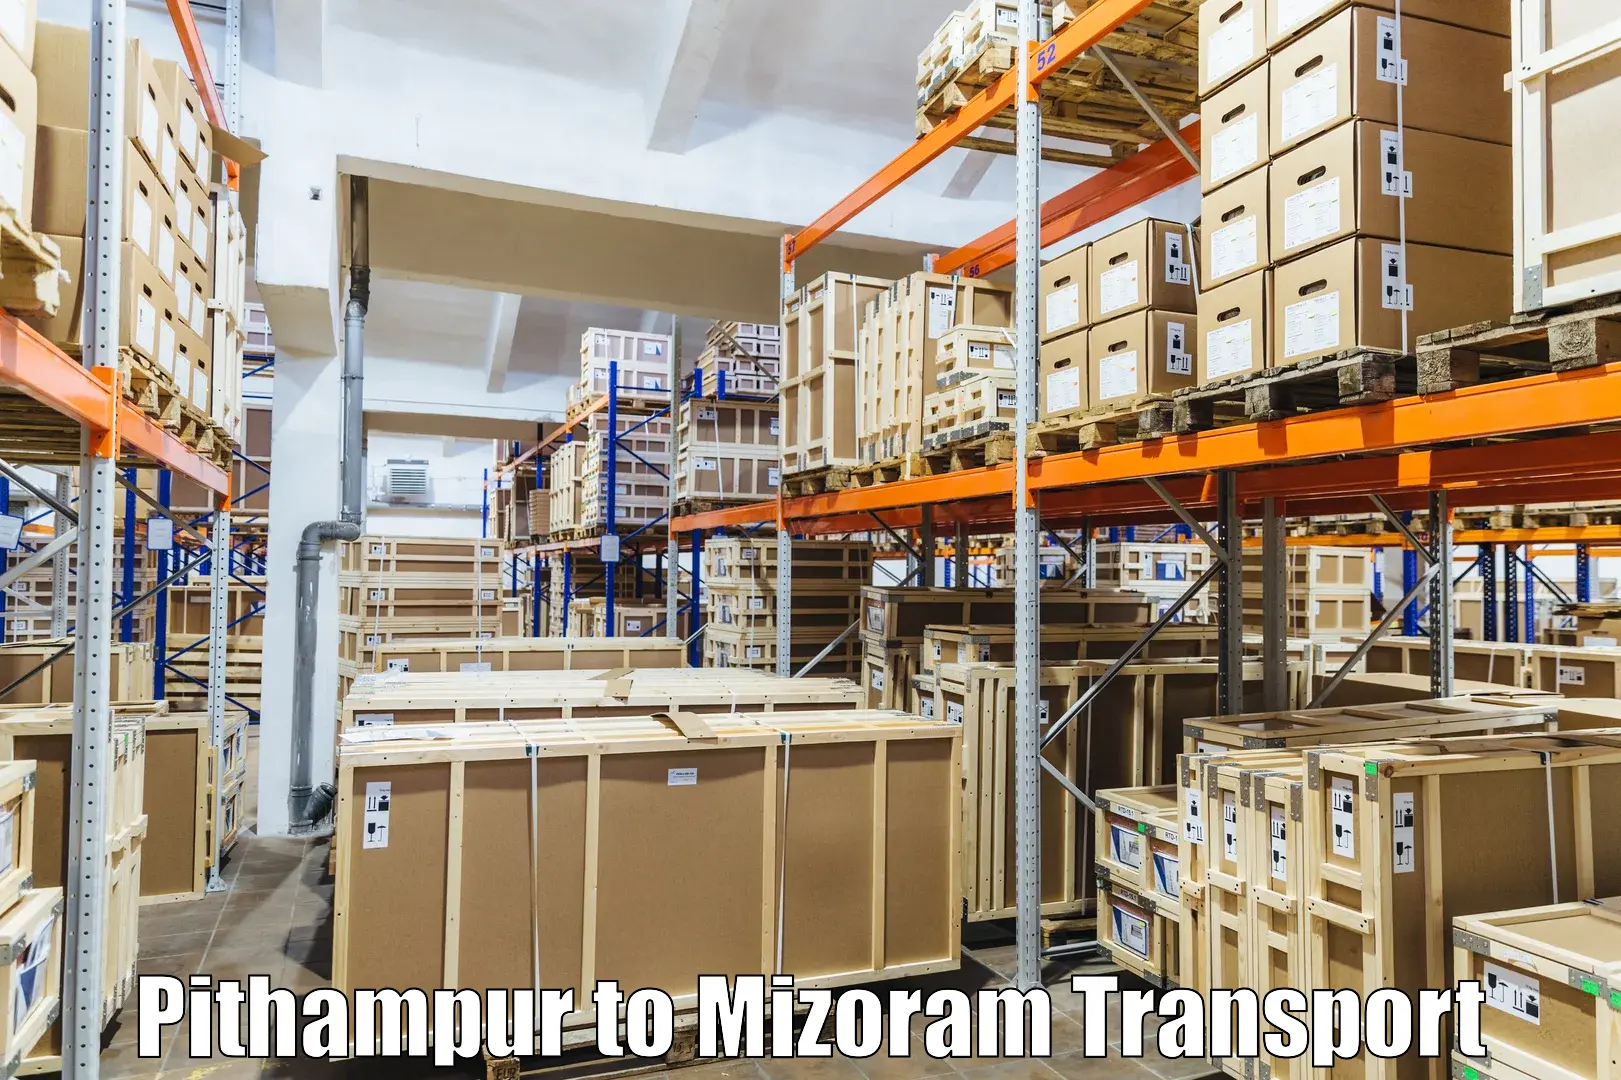 Transport in sharing in Pithampur to Mizoram